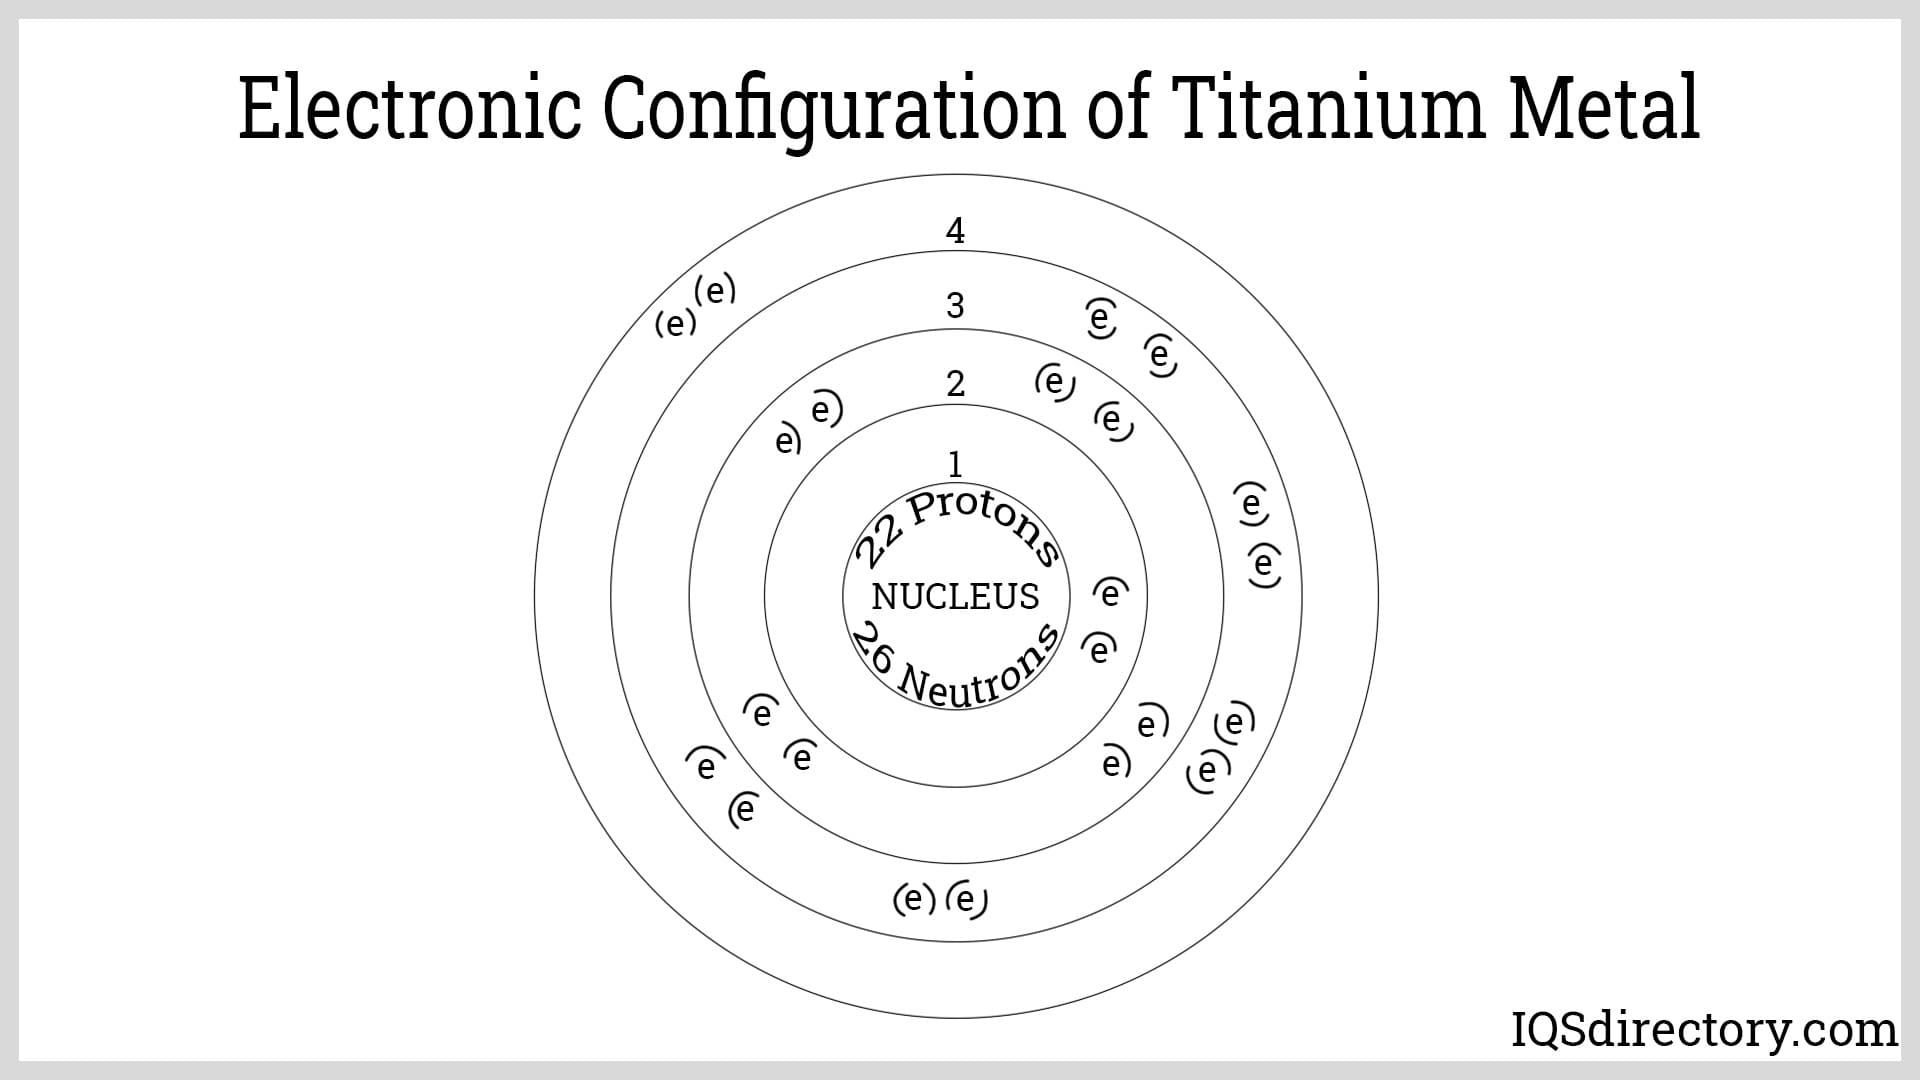 Electronic Configuration of Titanium Metal